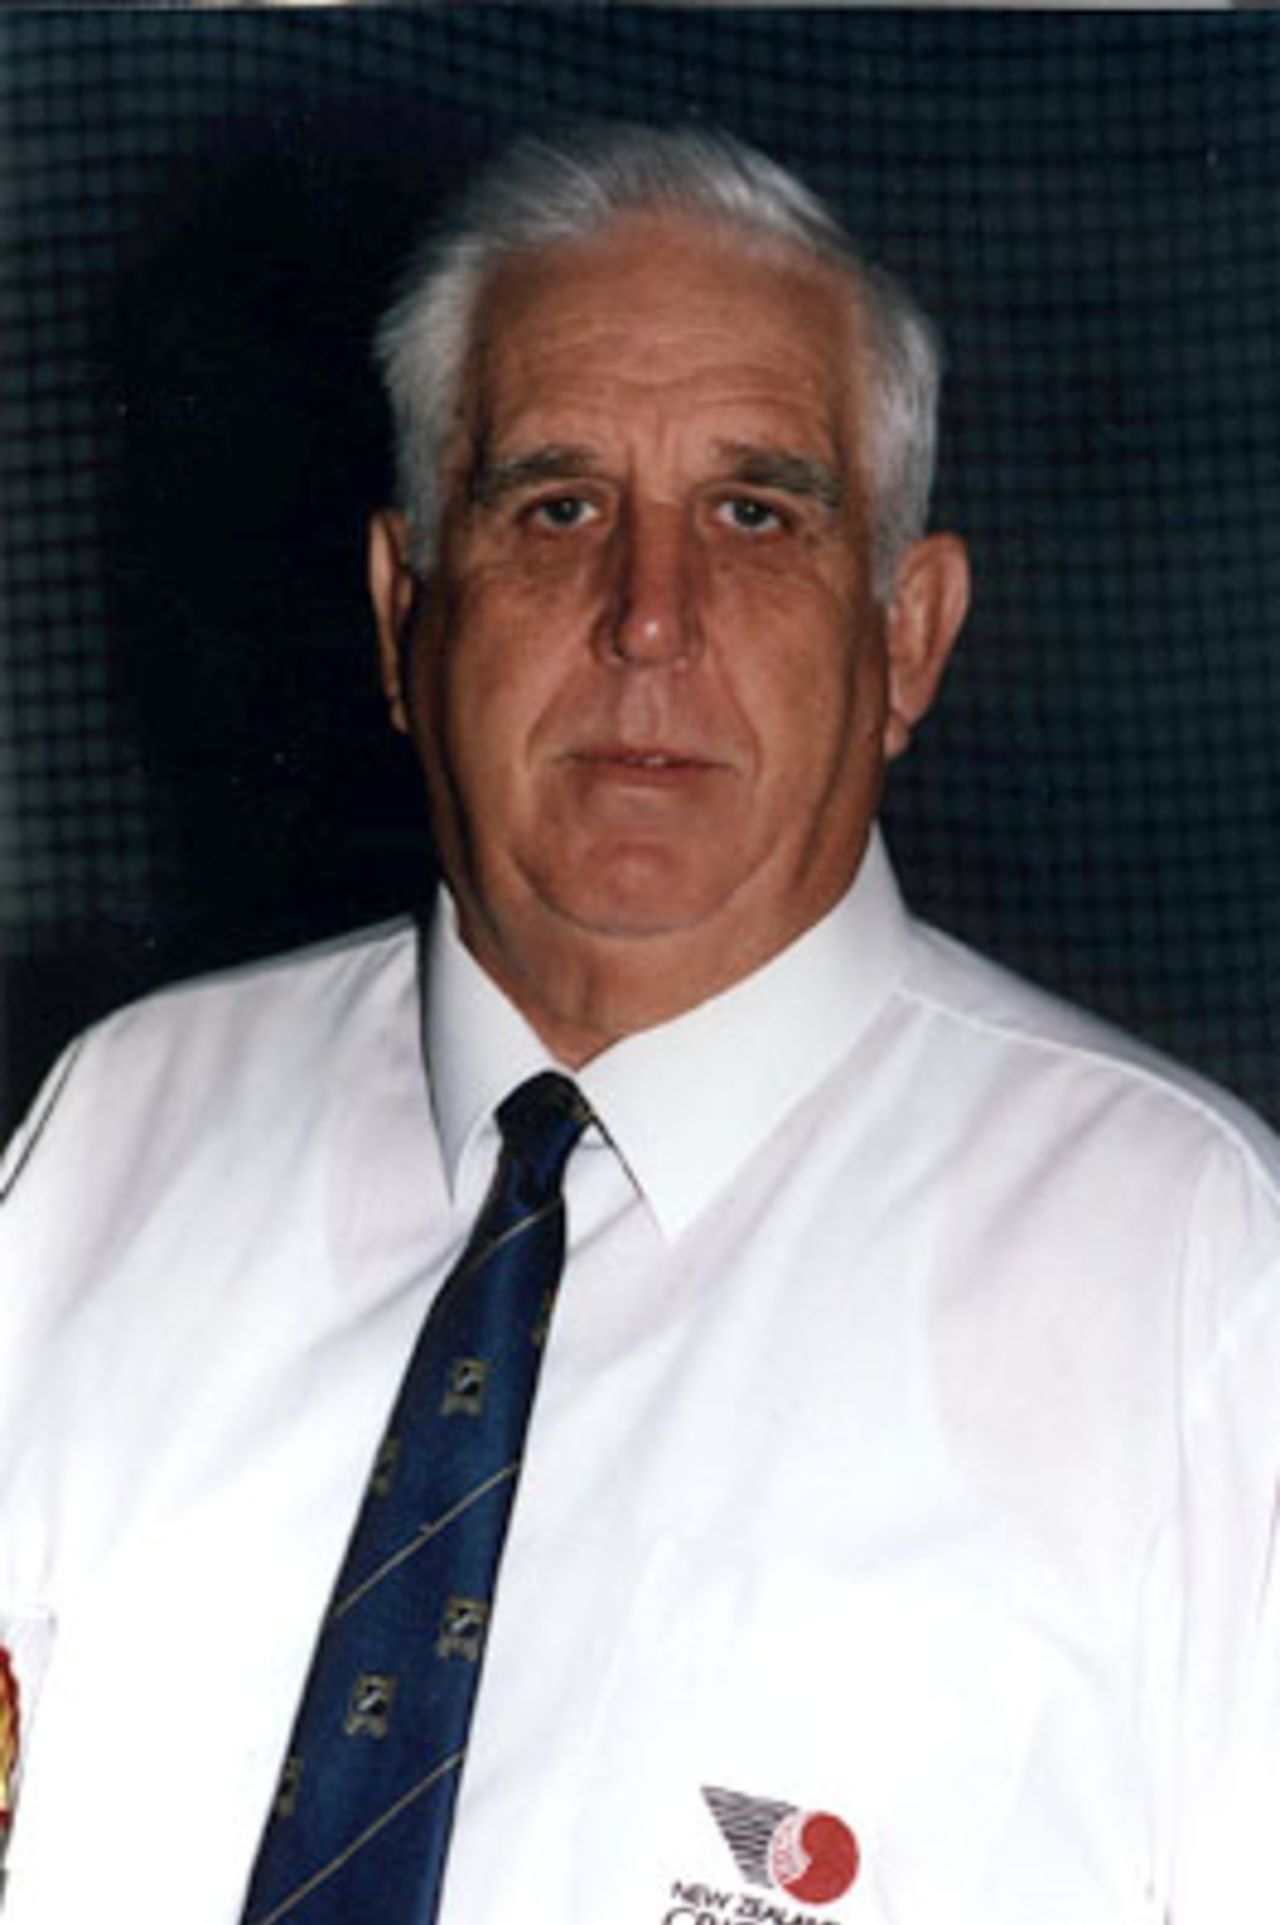 Portrait of Peter Wright - 2000/01 New Zealand Cricket reserve panel umpire